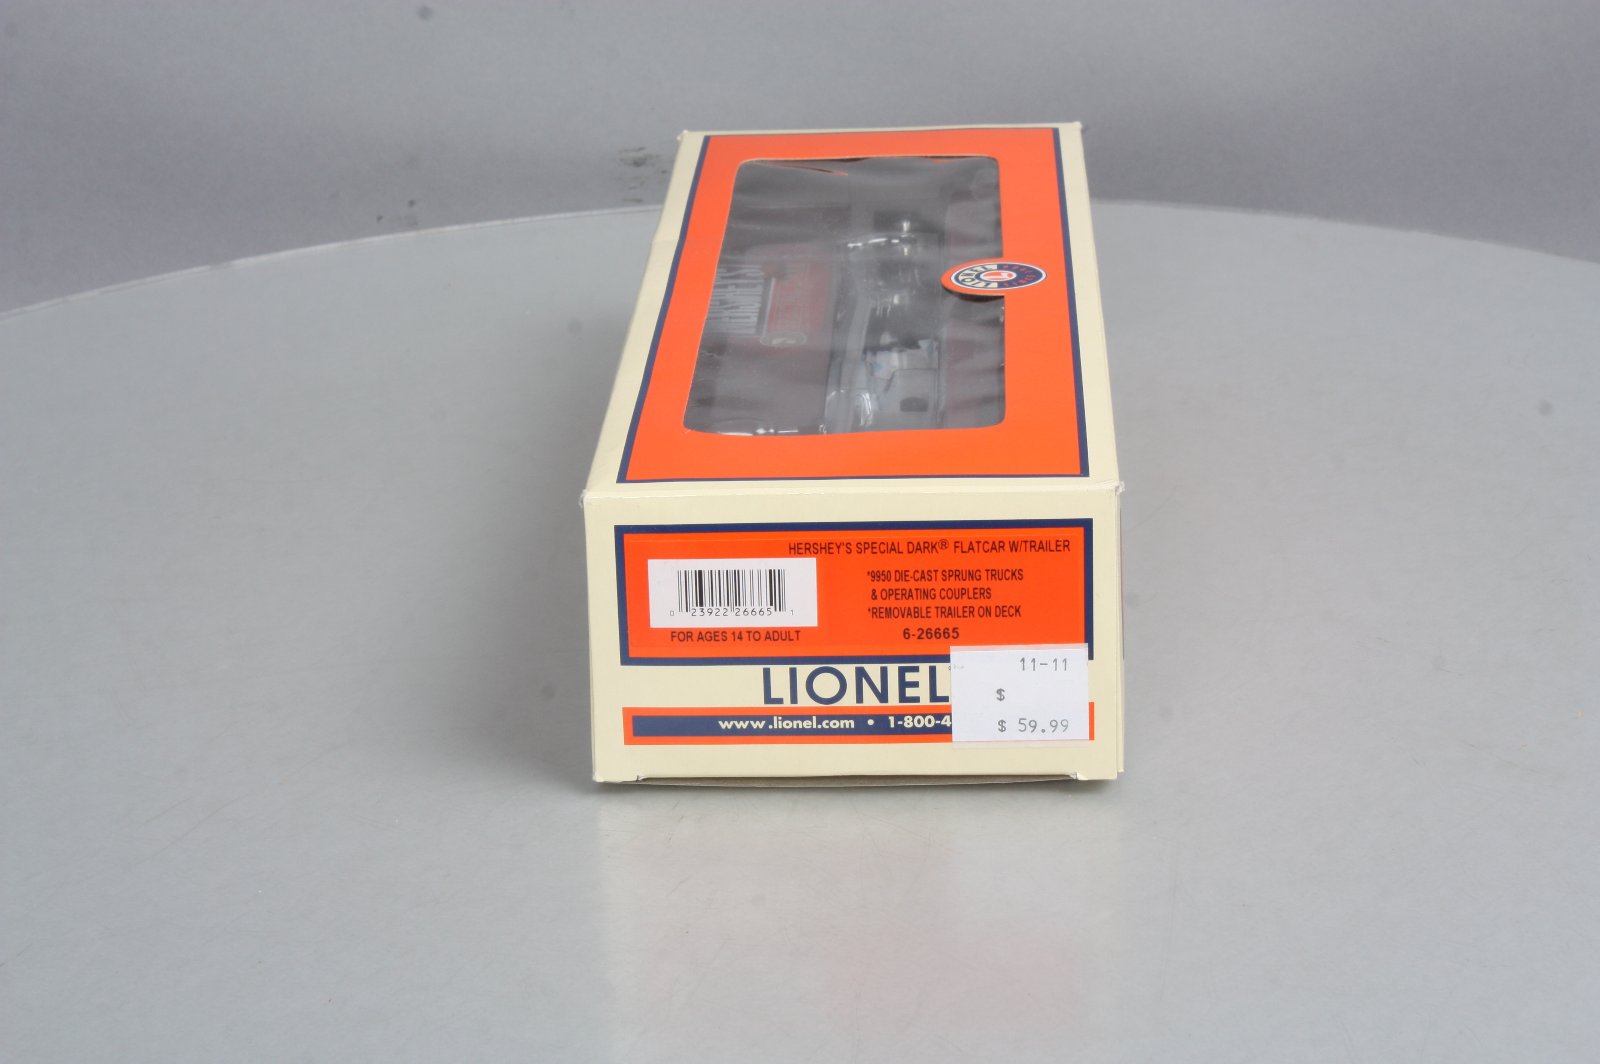 Lionel 6-26665 O Gauge Hersheys Special Dark Flatcar w/Trailer